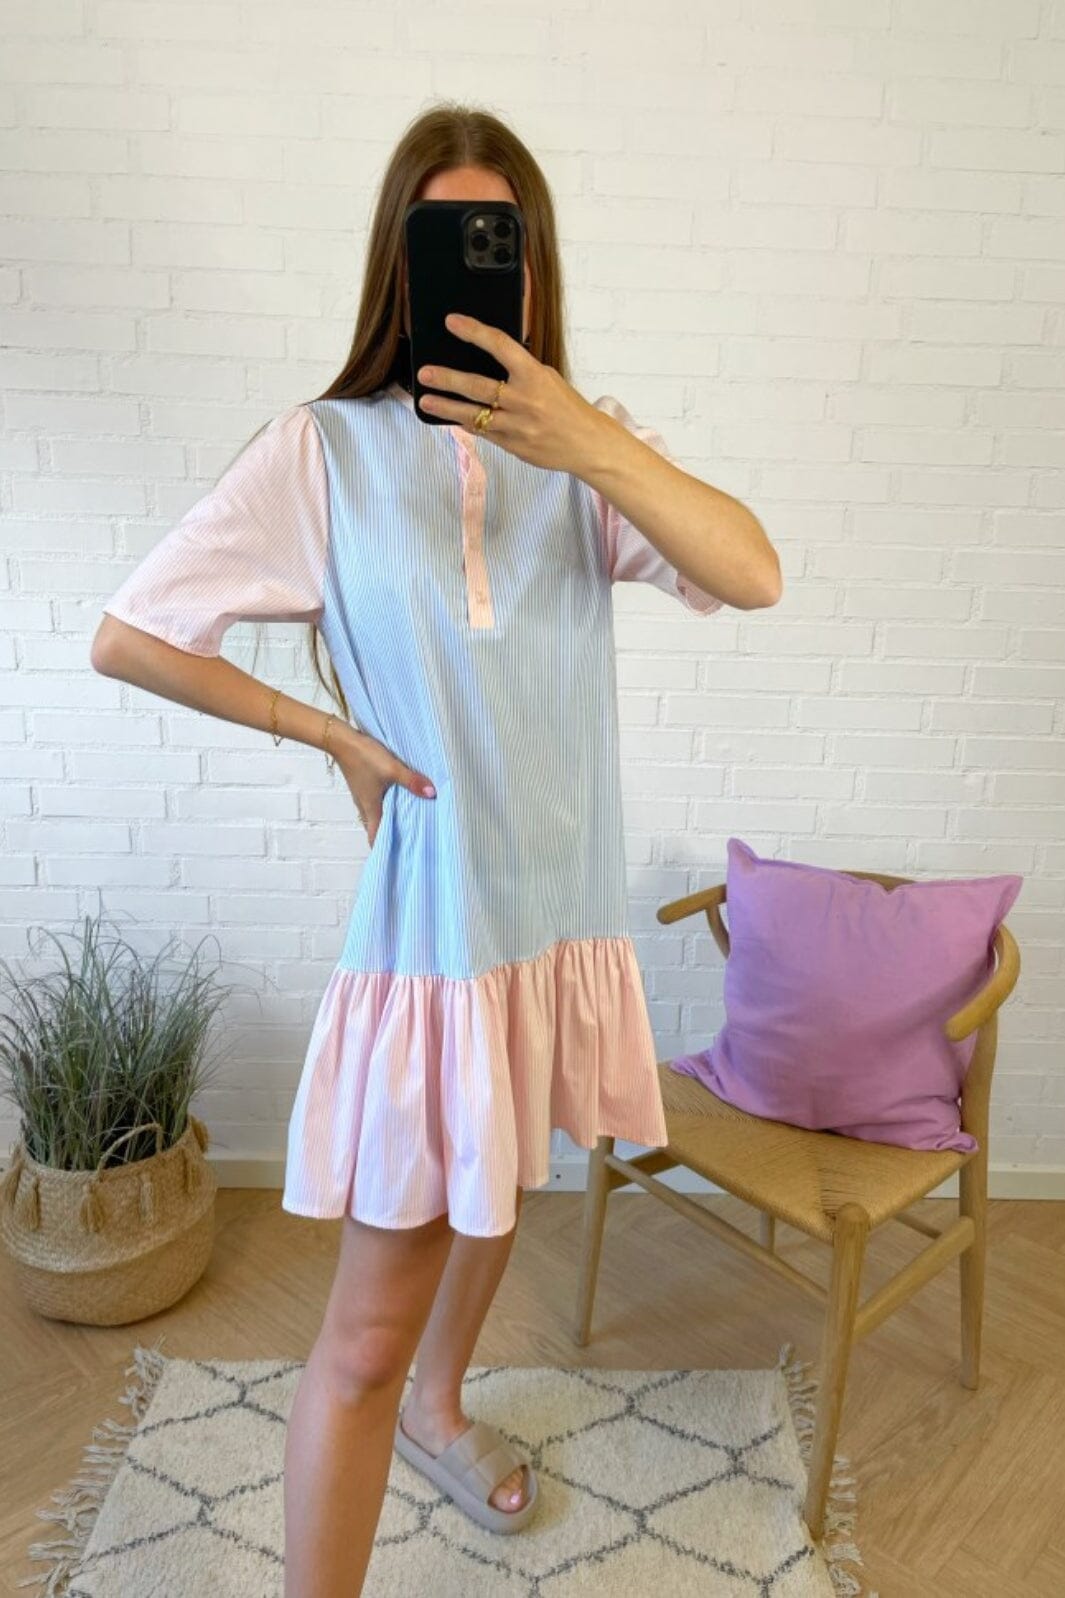 Noella - Taven Dress Poplin - 129 Blue/Rose Stripe Kjoler 